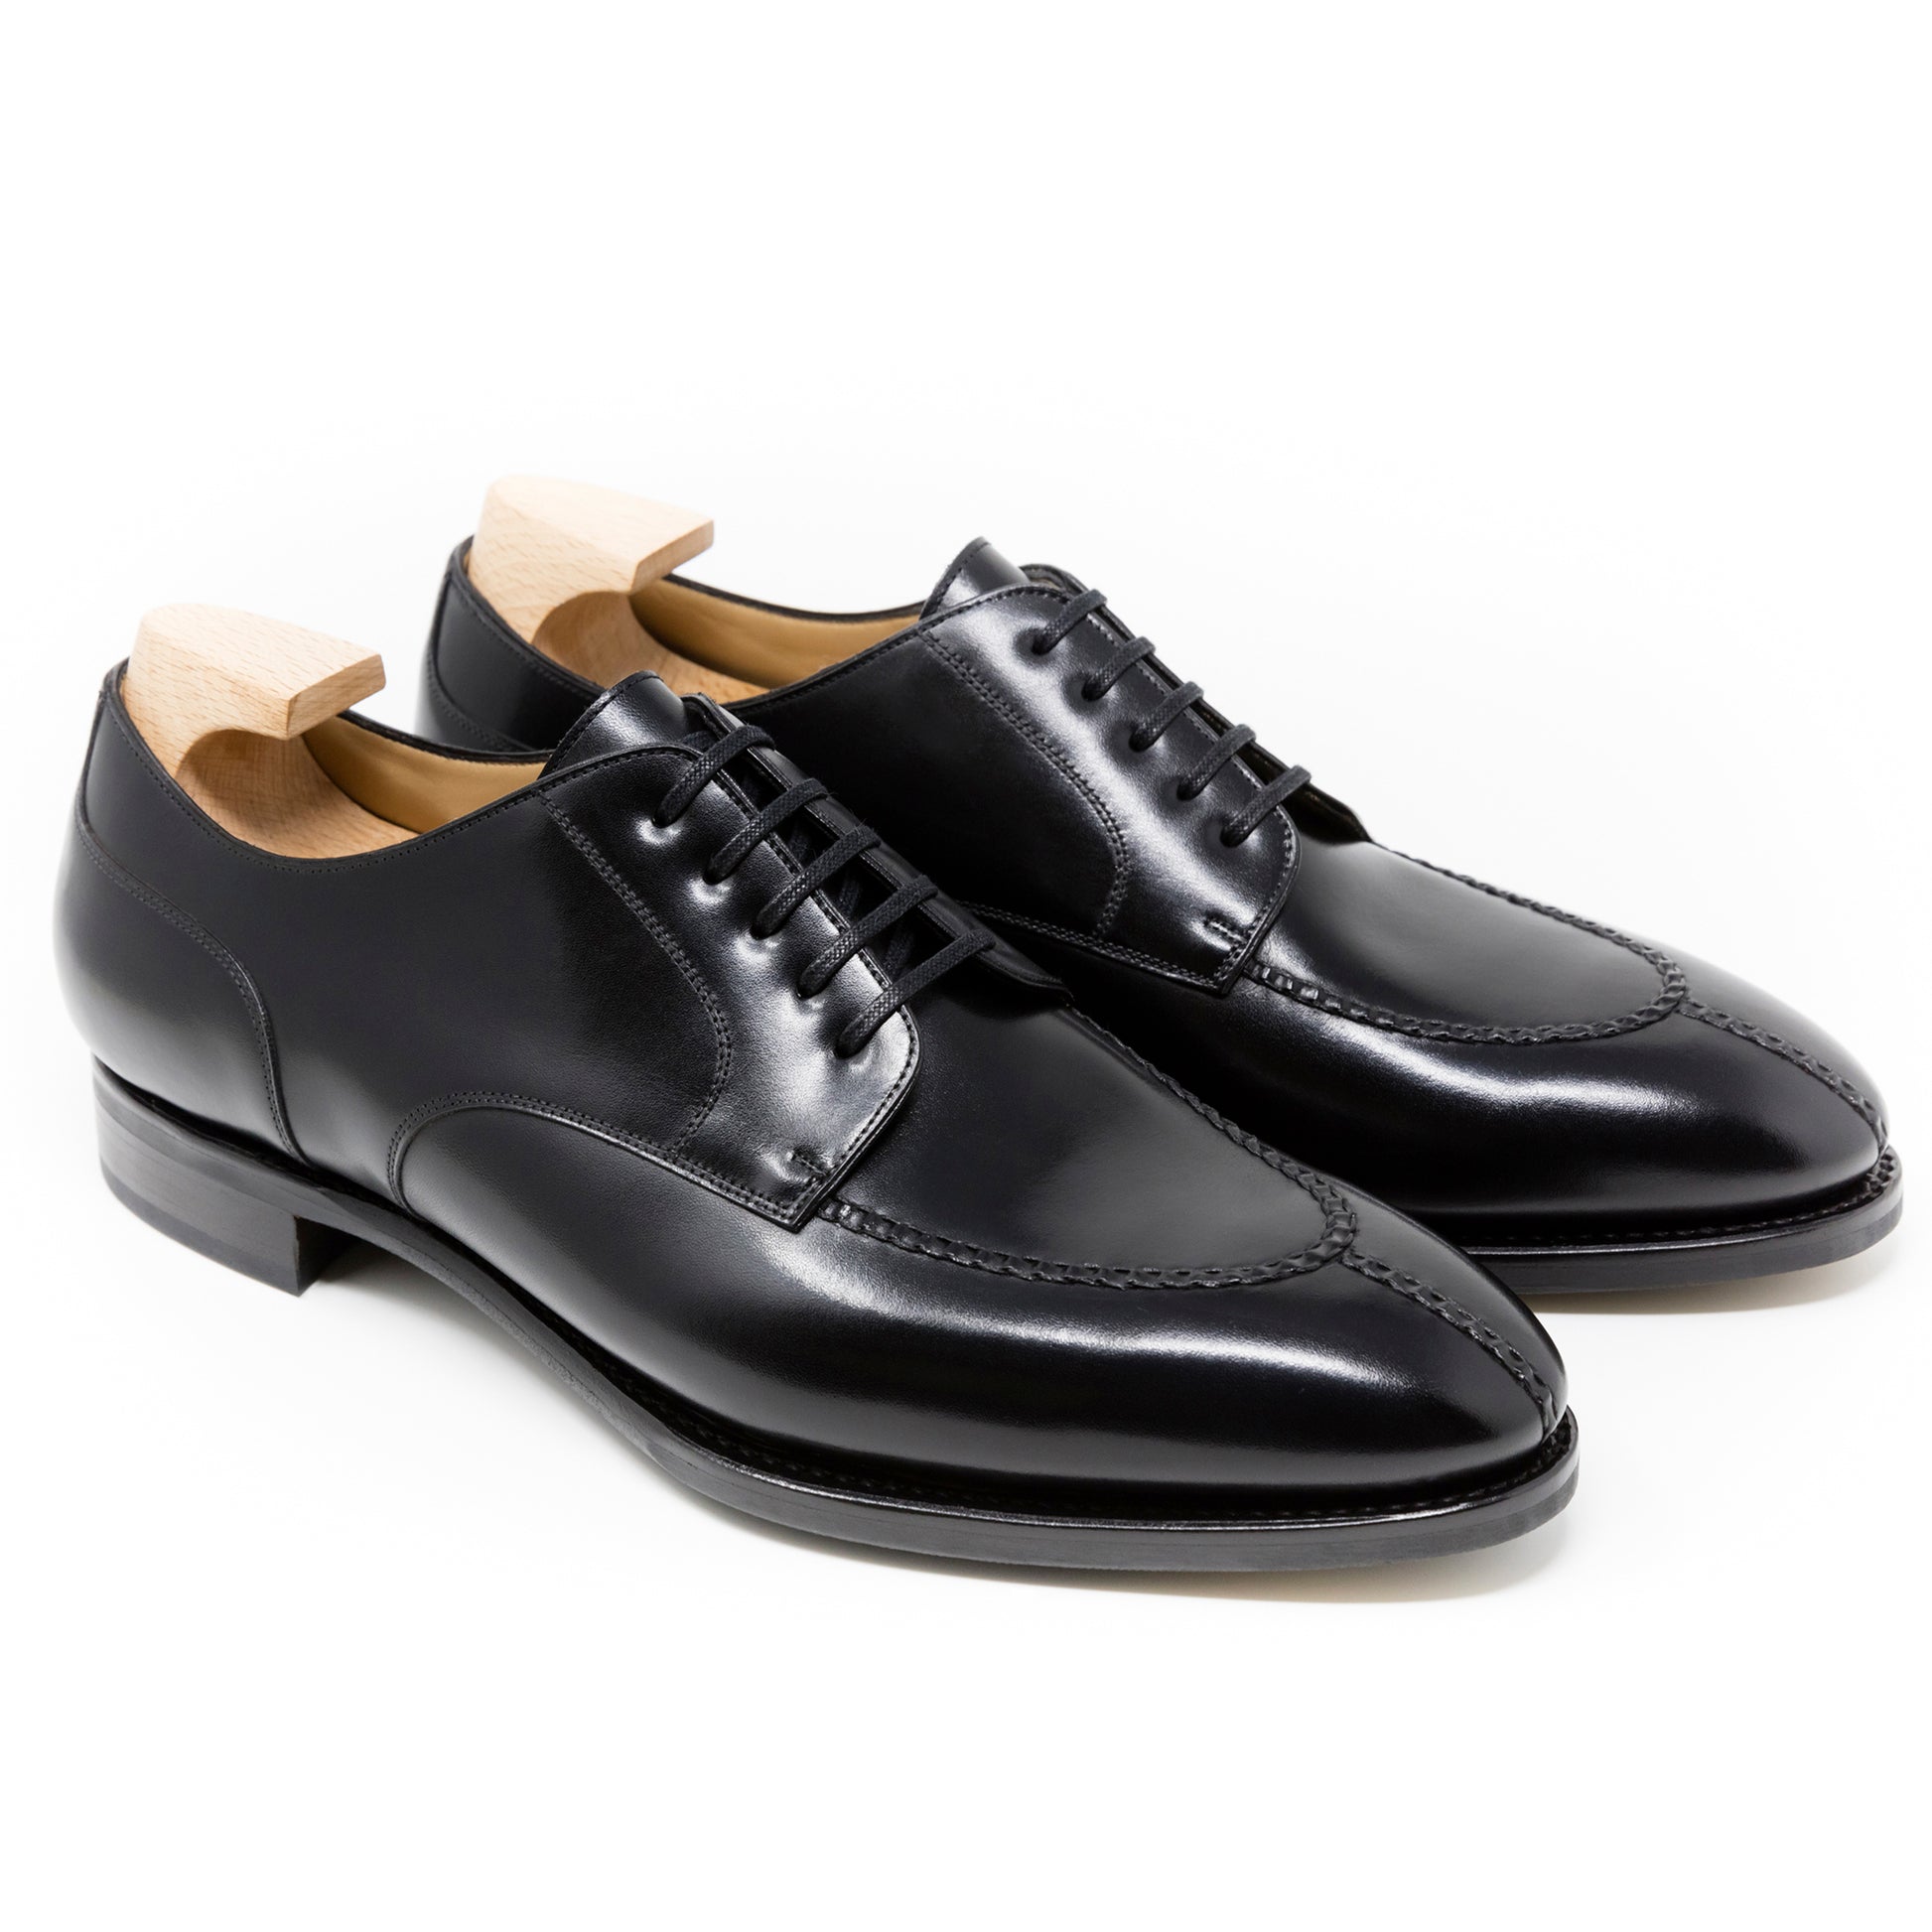 TLB Mallorca leather shoes 136 / GOYA / BOXCALF BLACK